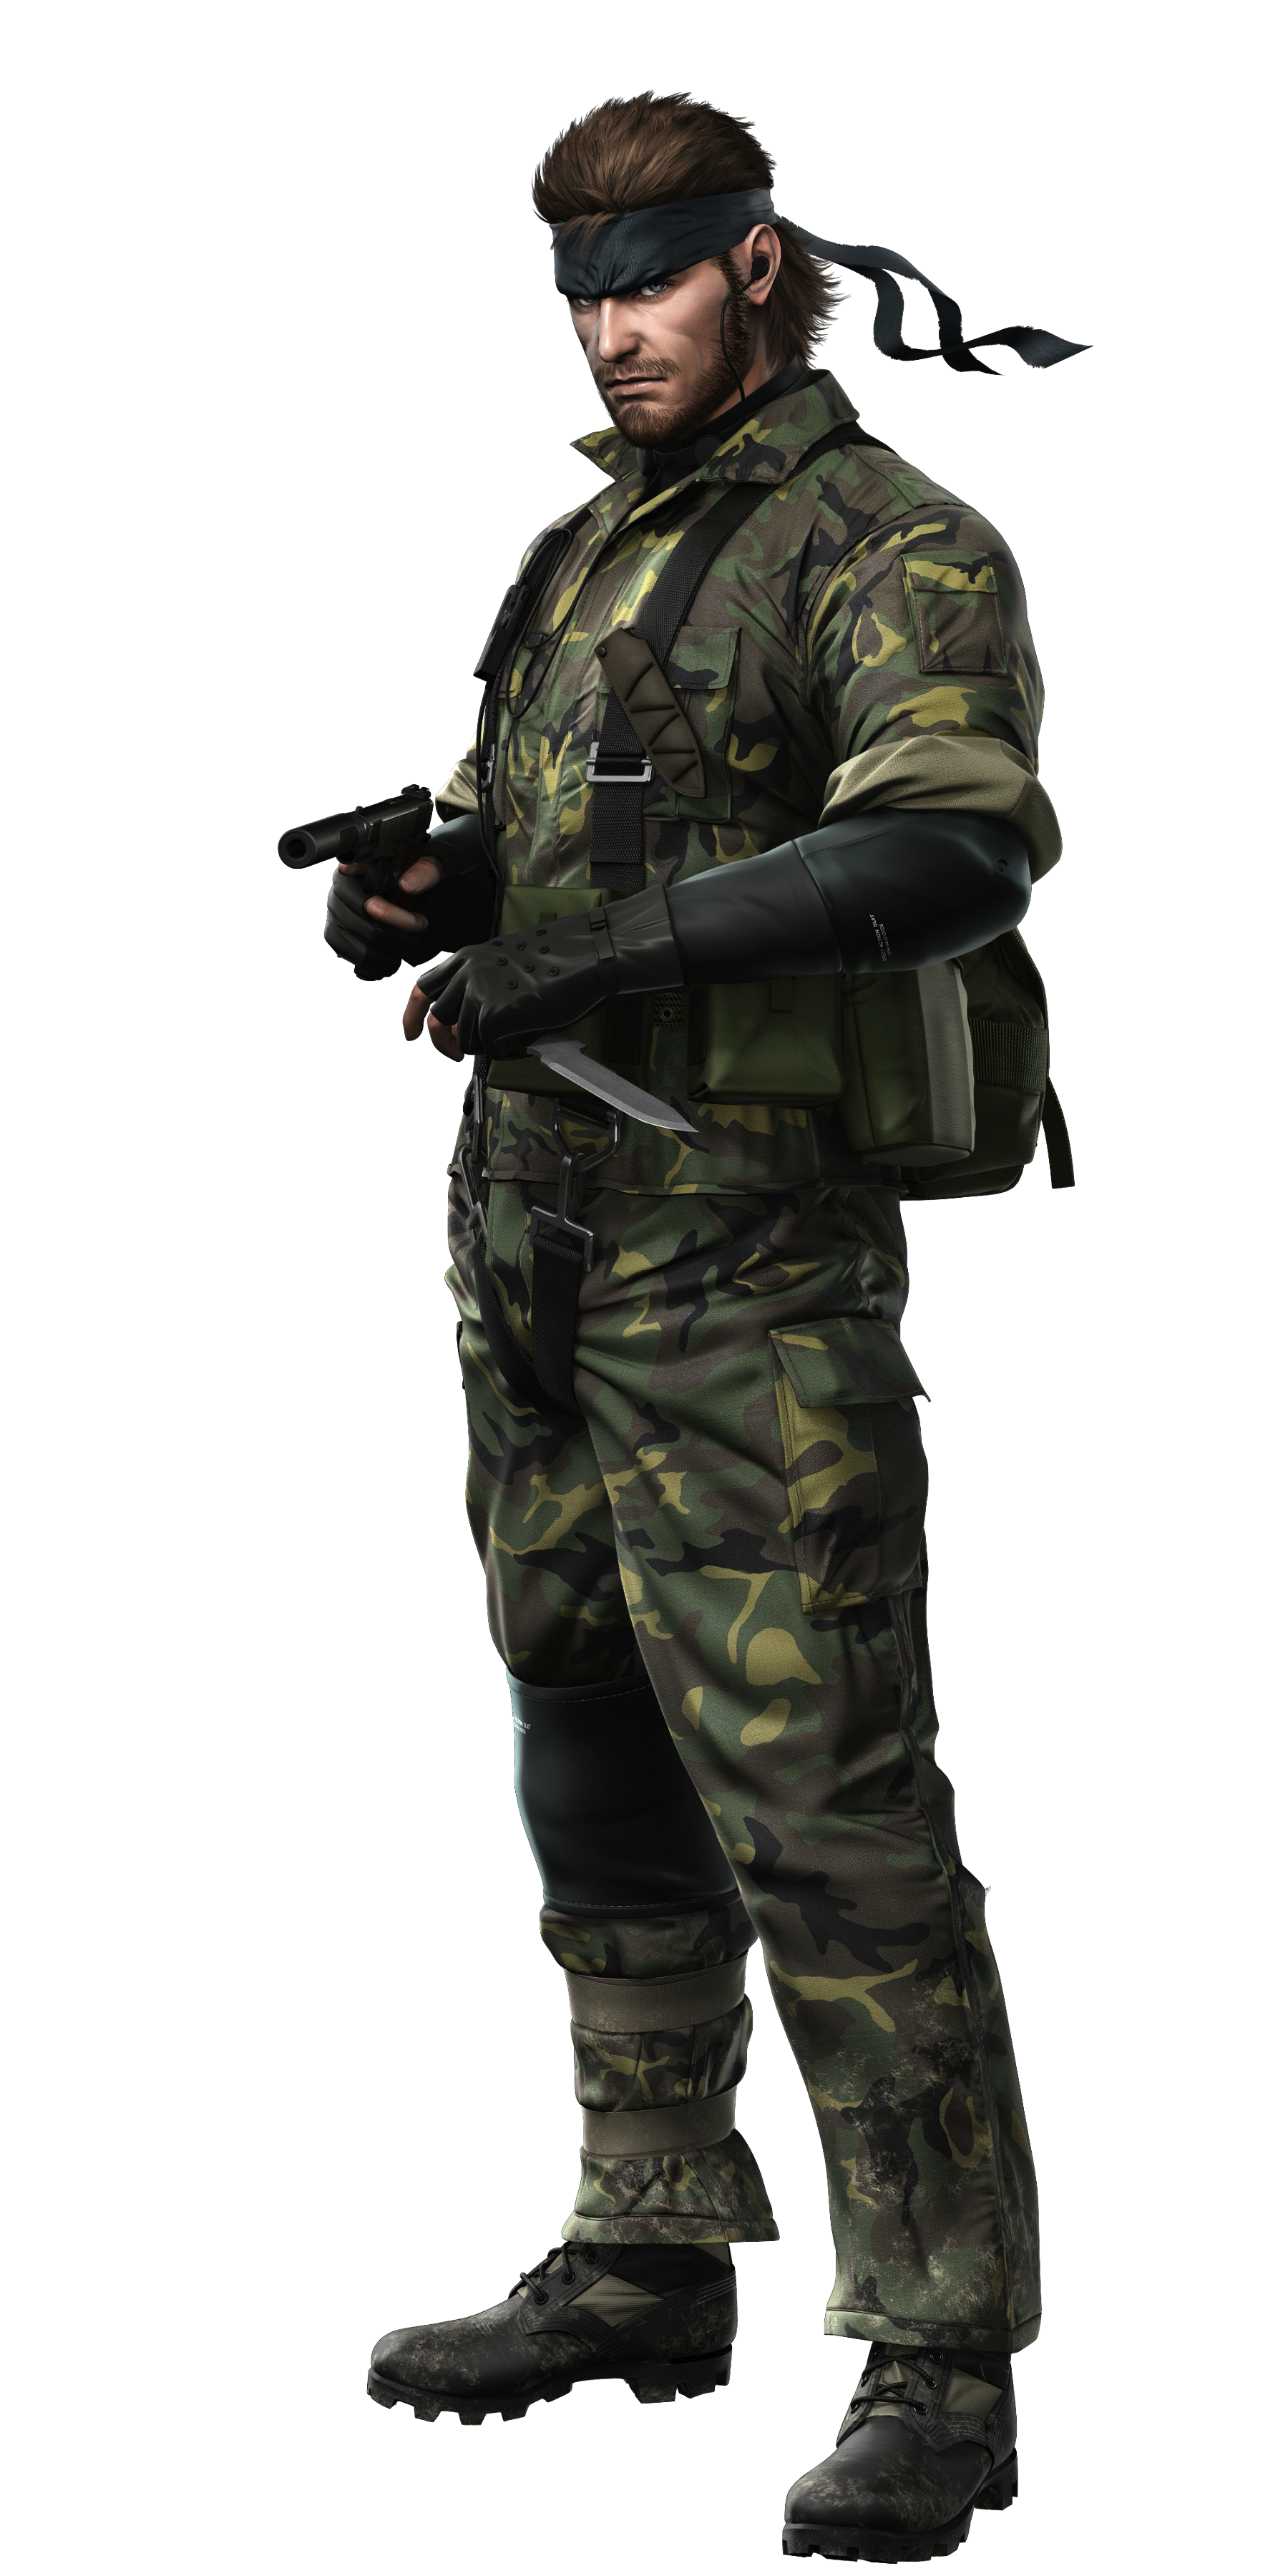 Big Metal Gear Boss Free Transparent Image HQ PNG Image